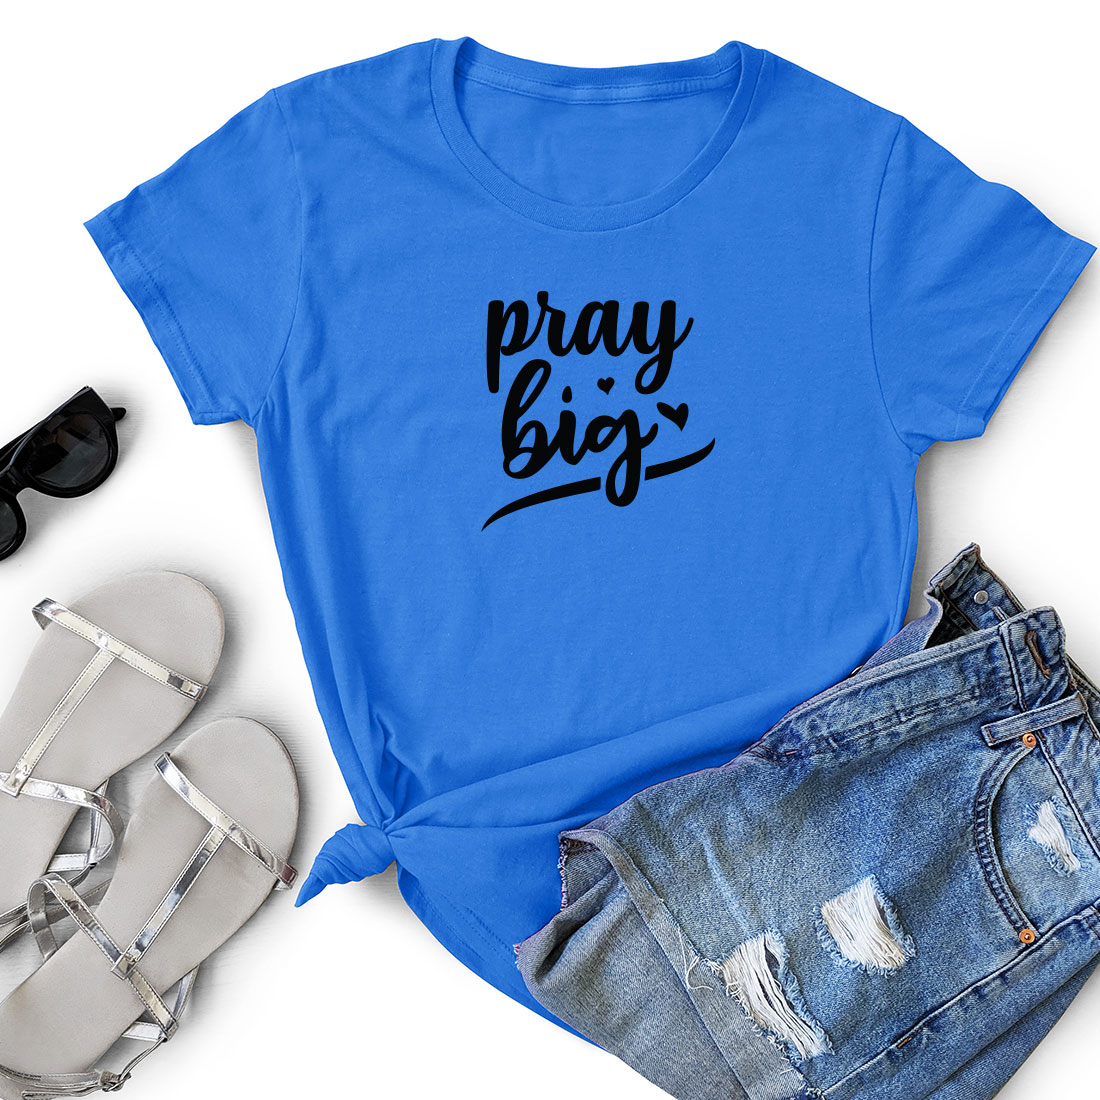 T - shirt that says pray big on it.